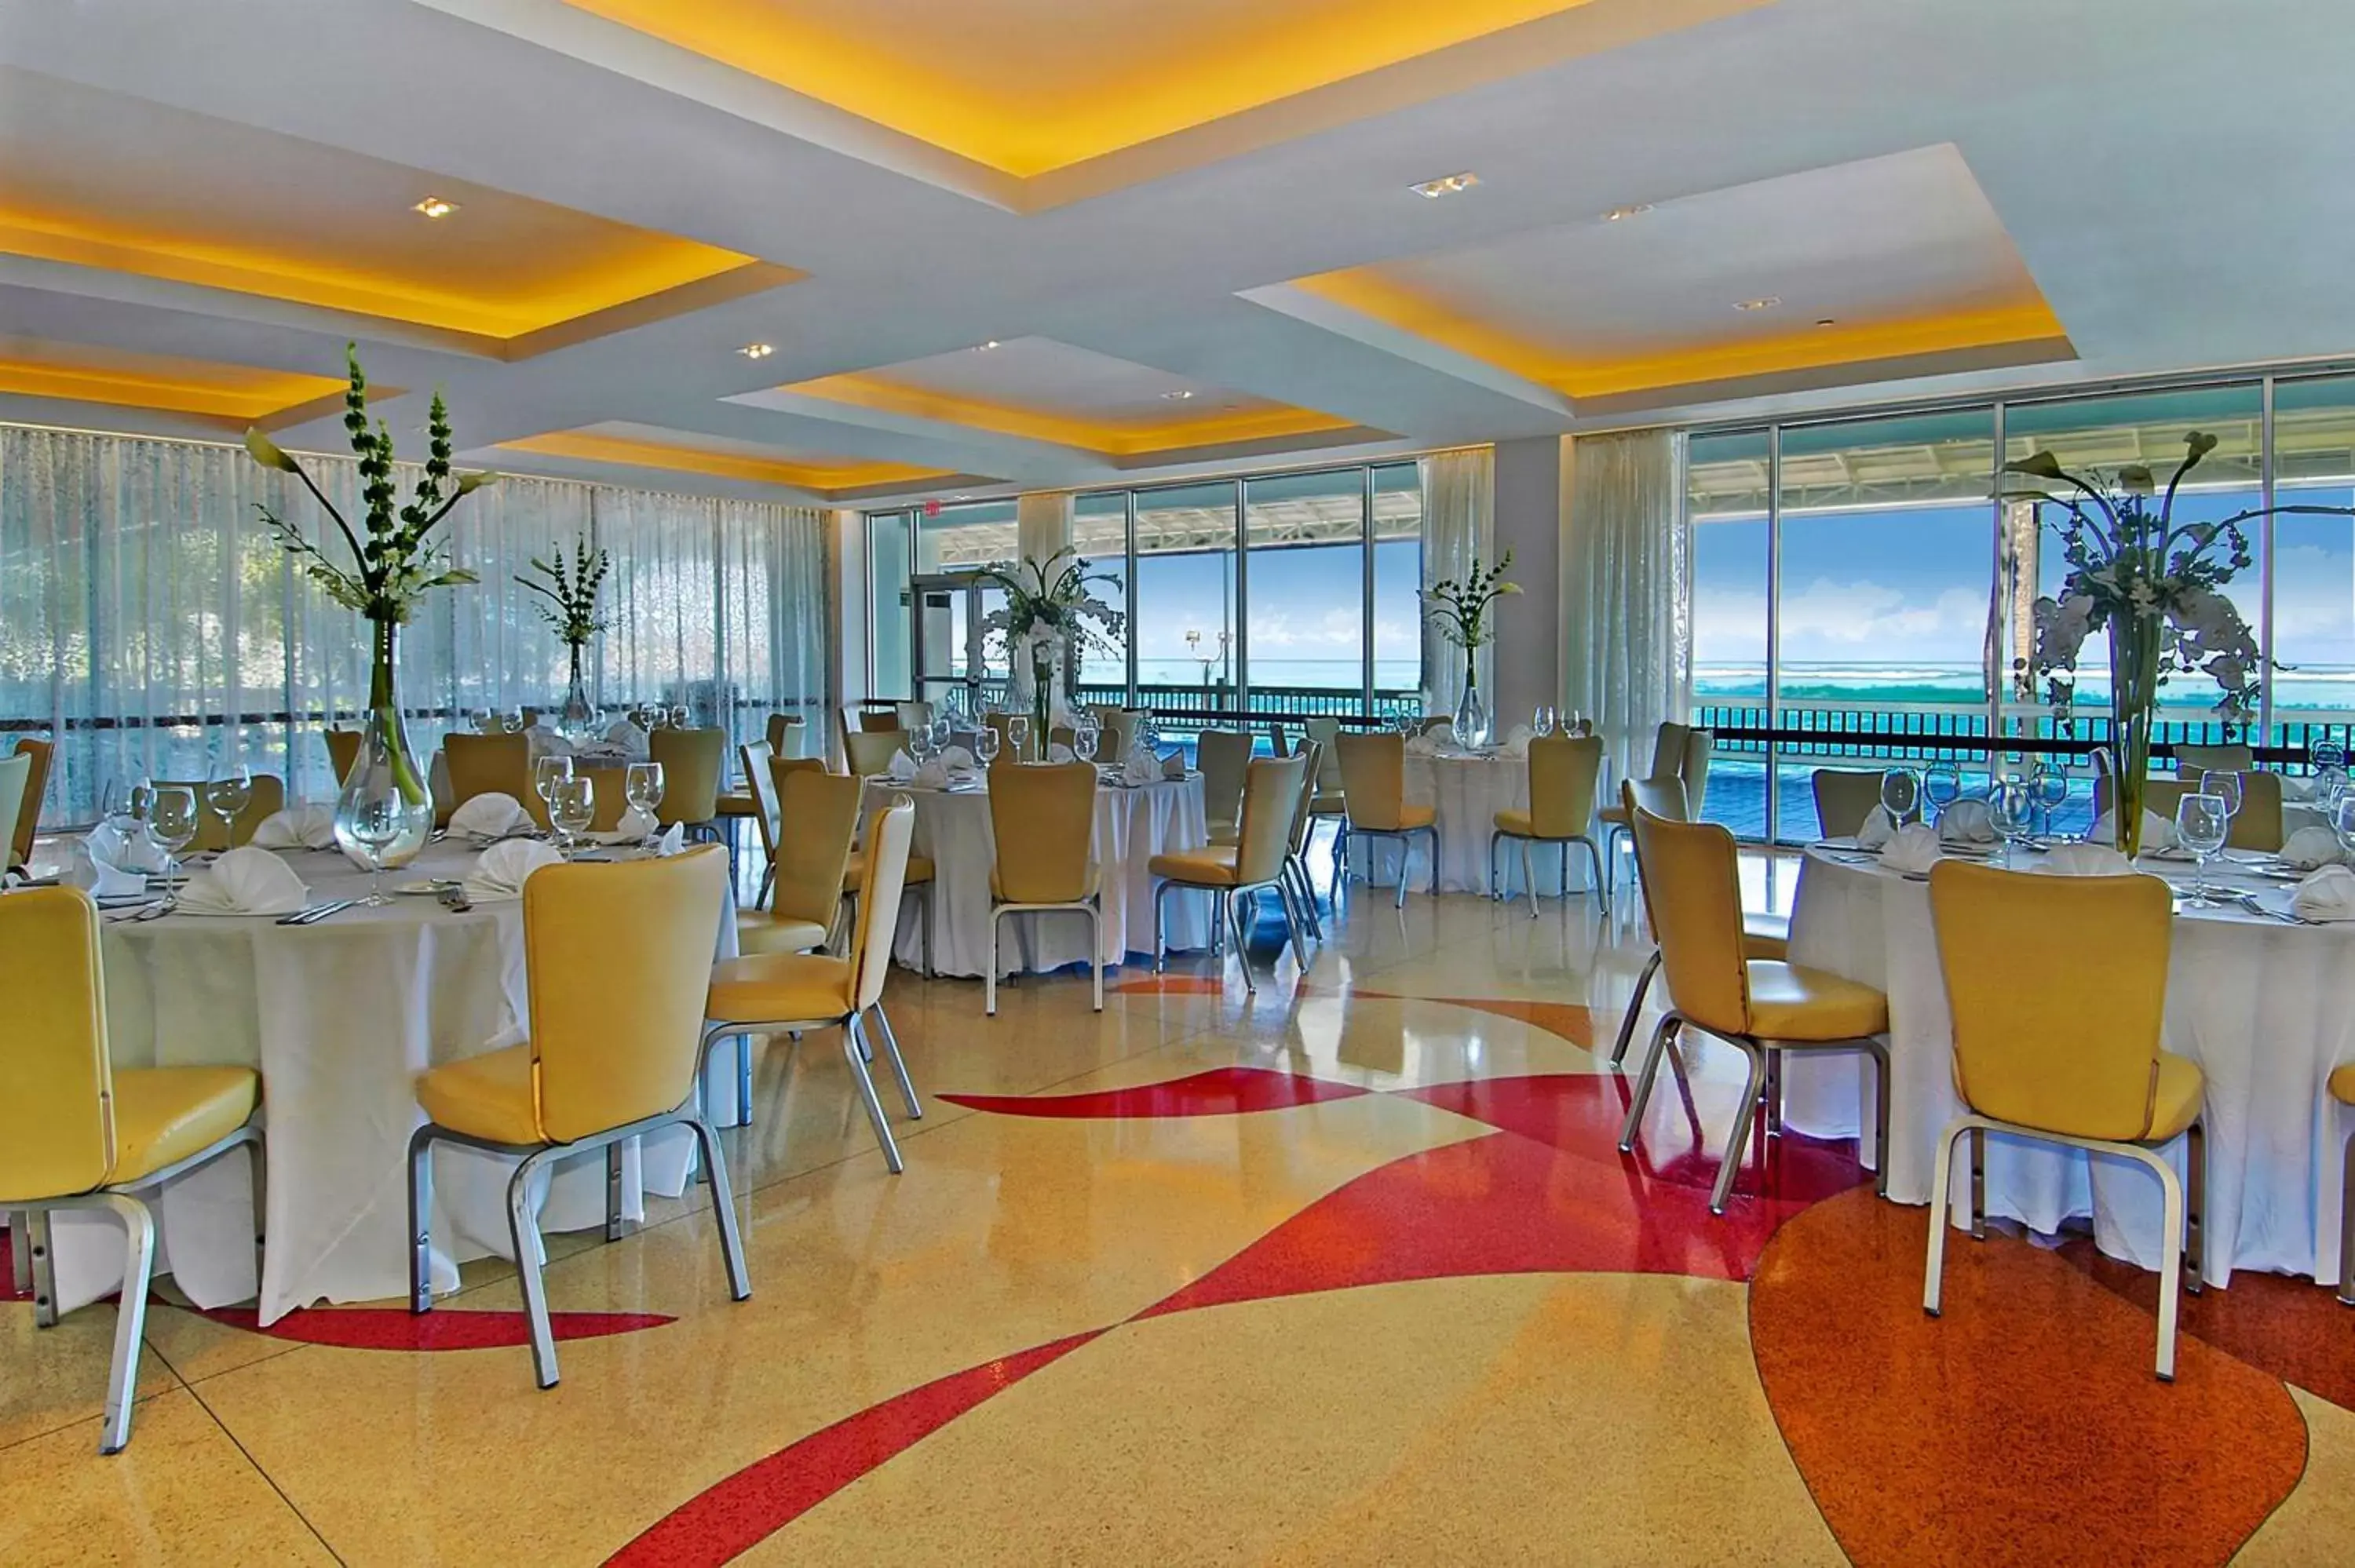 Meeting/conference room, Banquet Facilities in The Condado Plaza Hilton